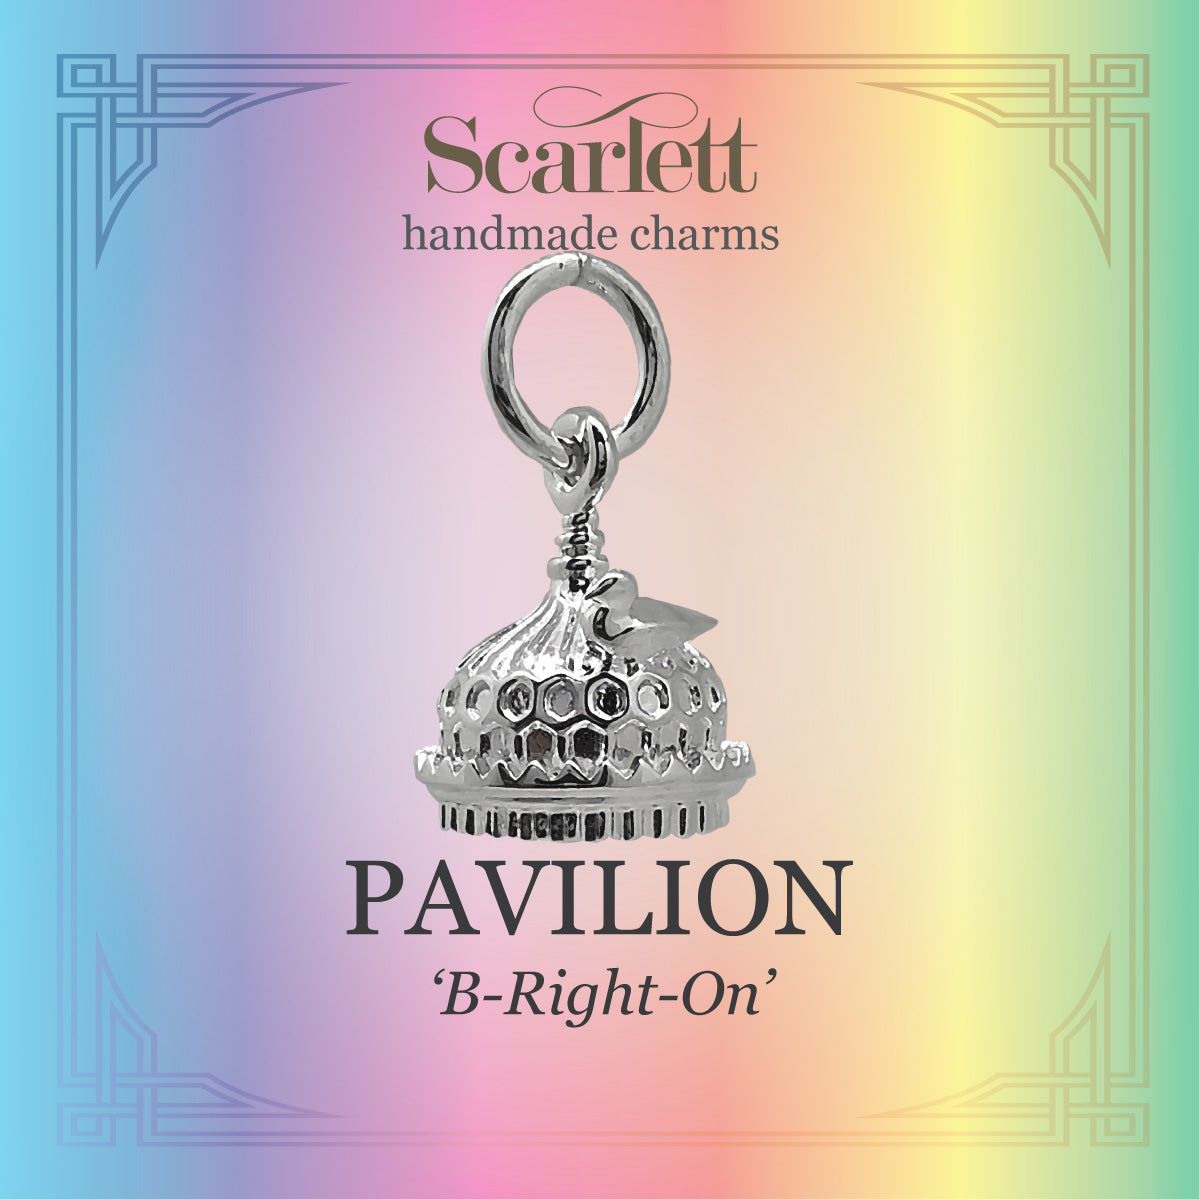 Brighton Pavilion Silver Charm With seagull Scarlett Jewellery